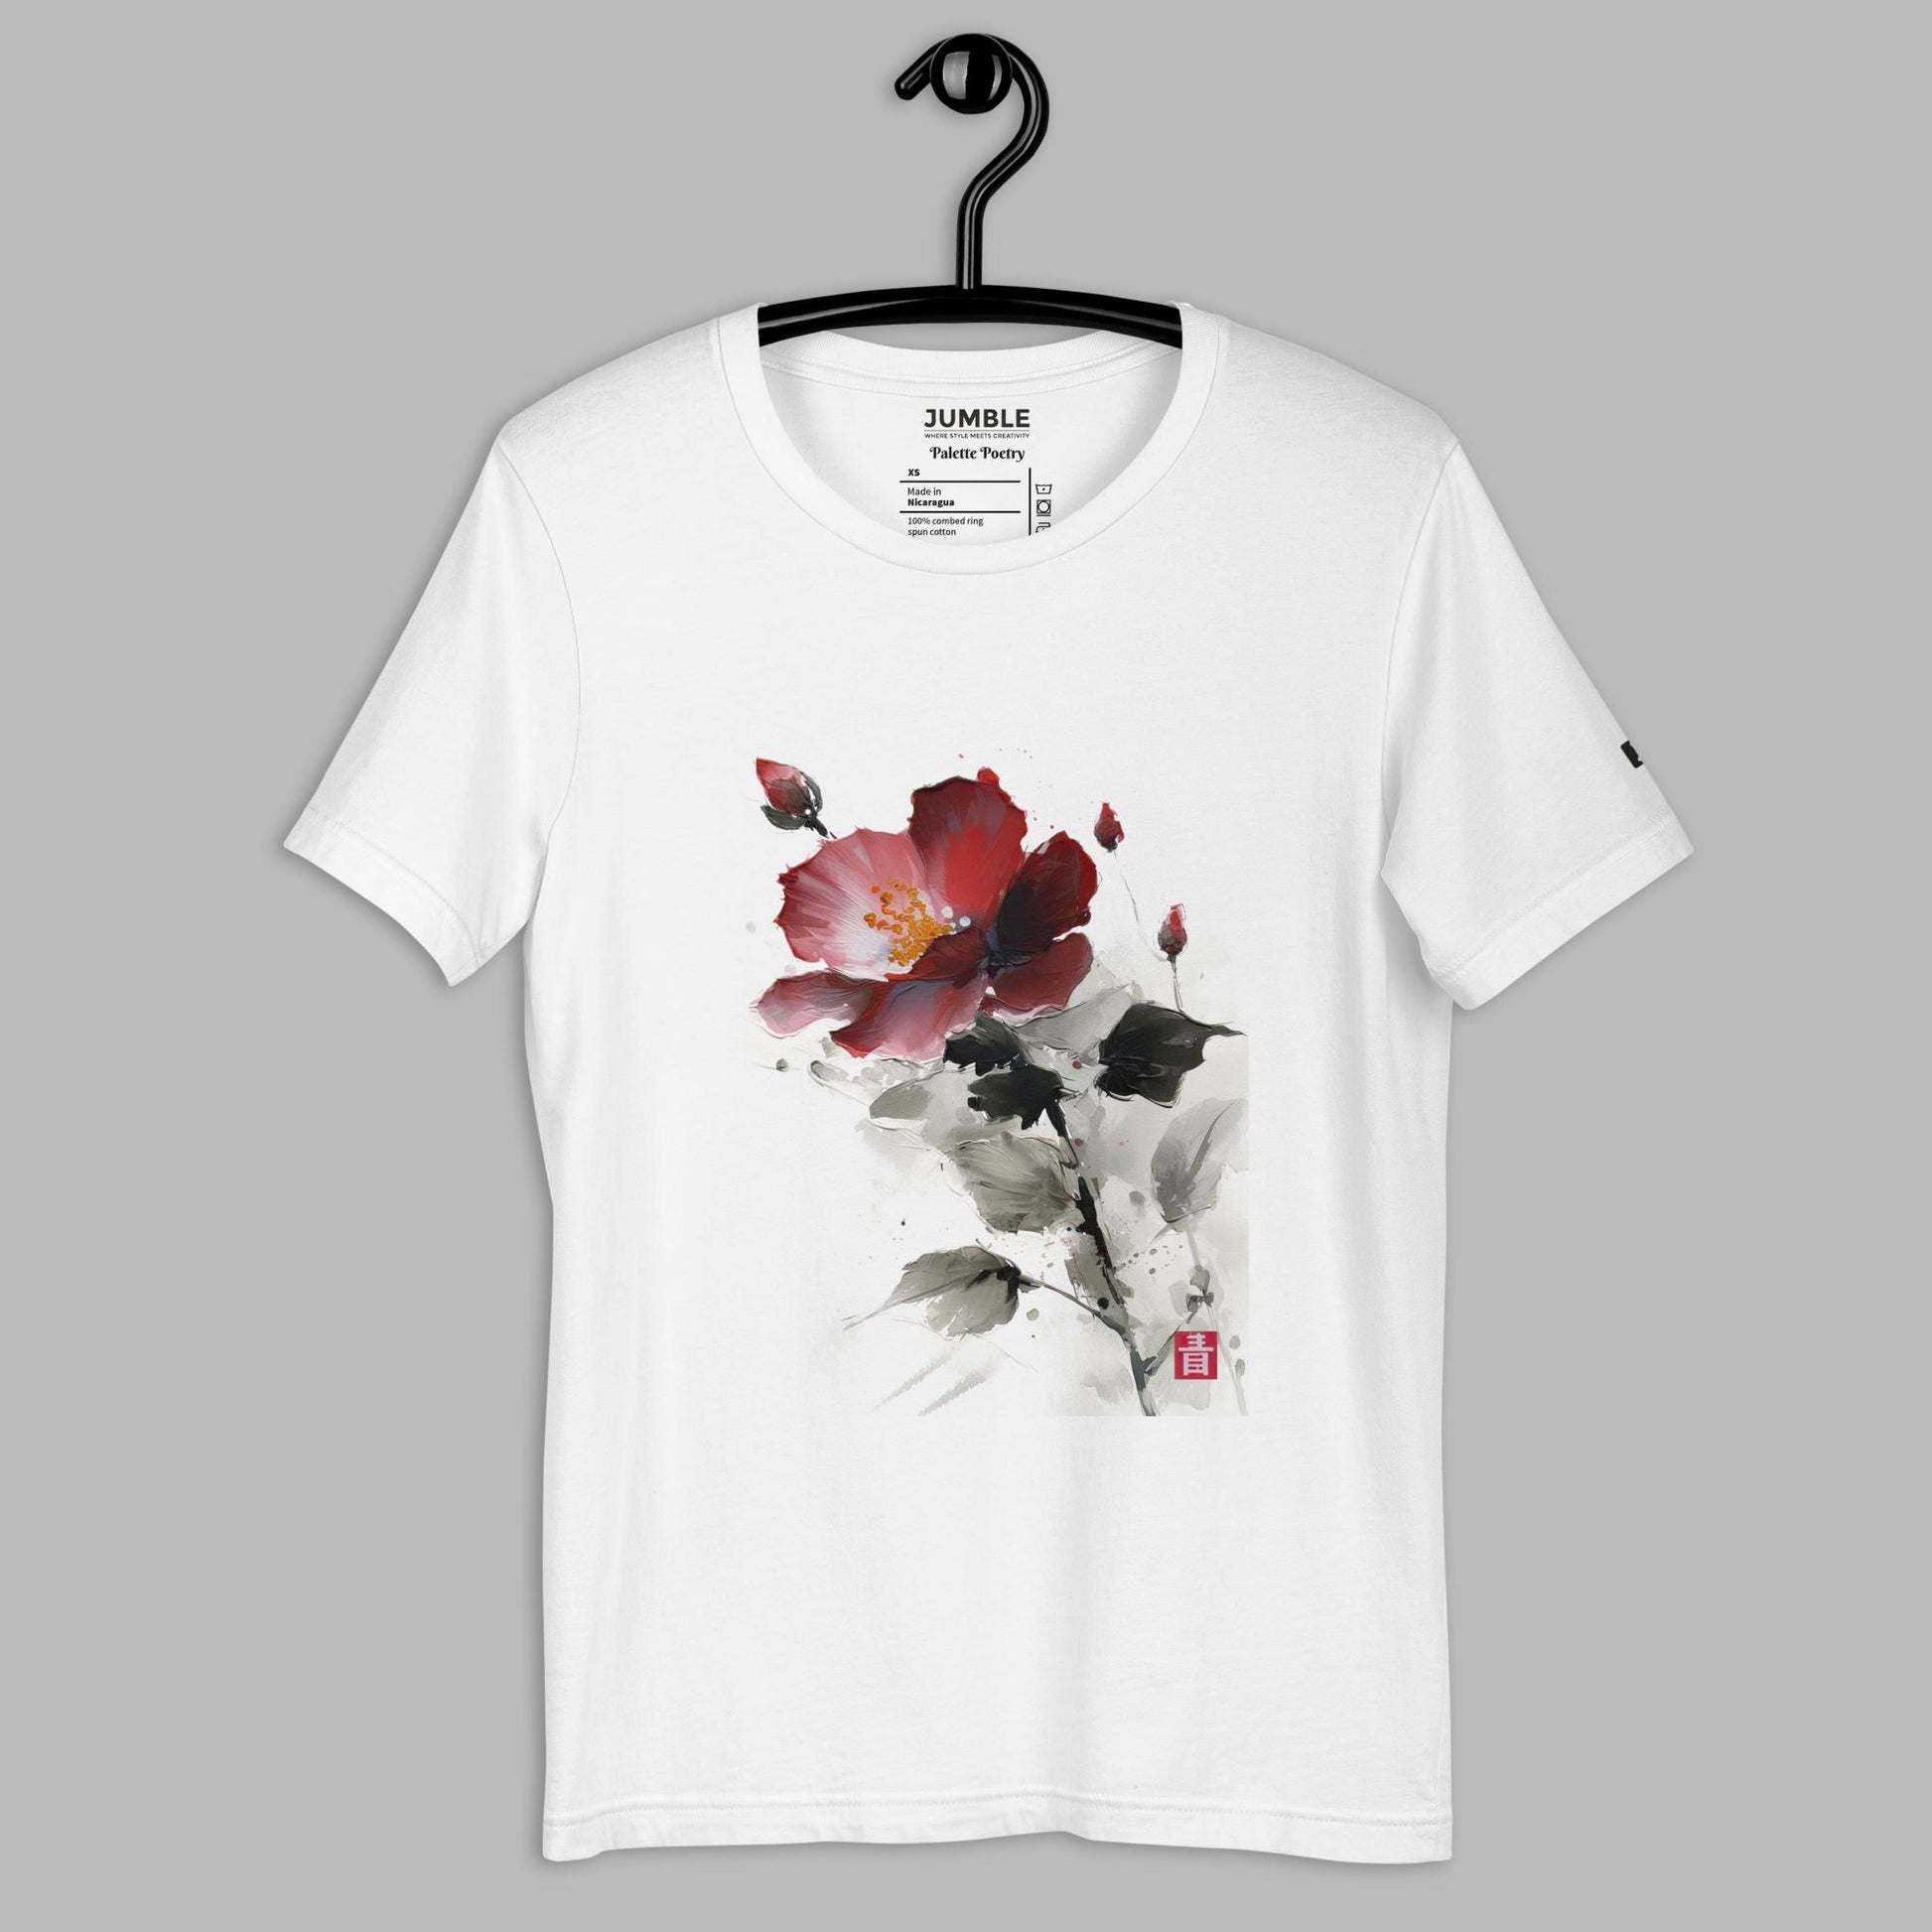 Palette Poetry Unisex t-shirt, in white. On a hanger